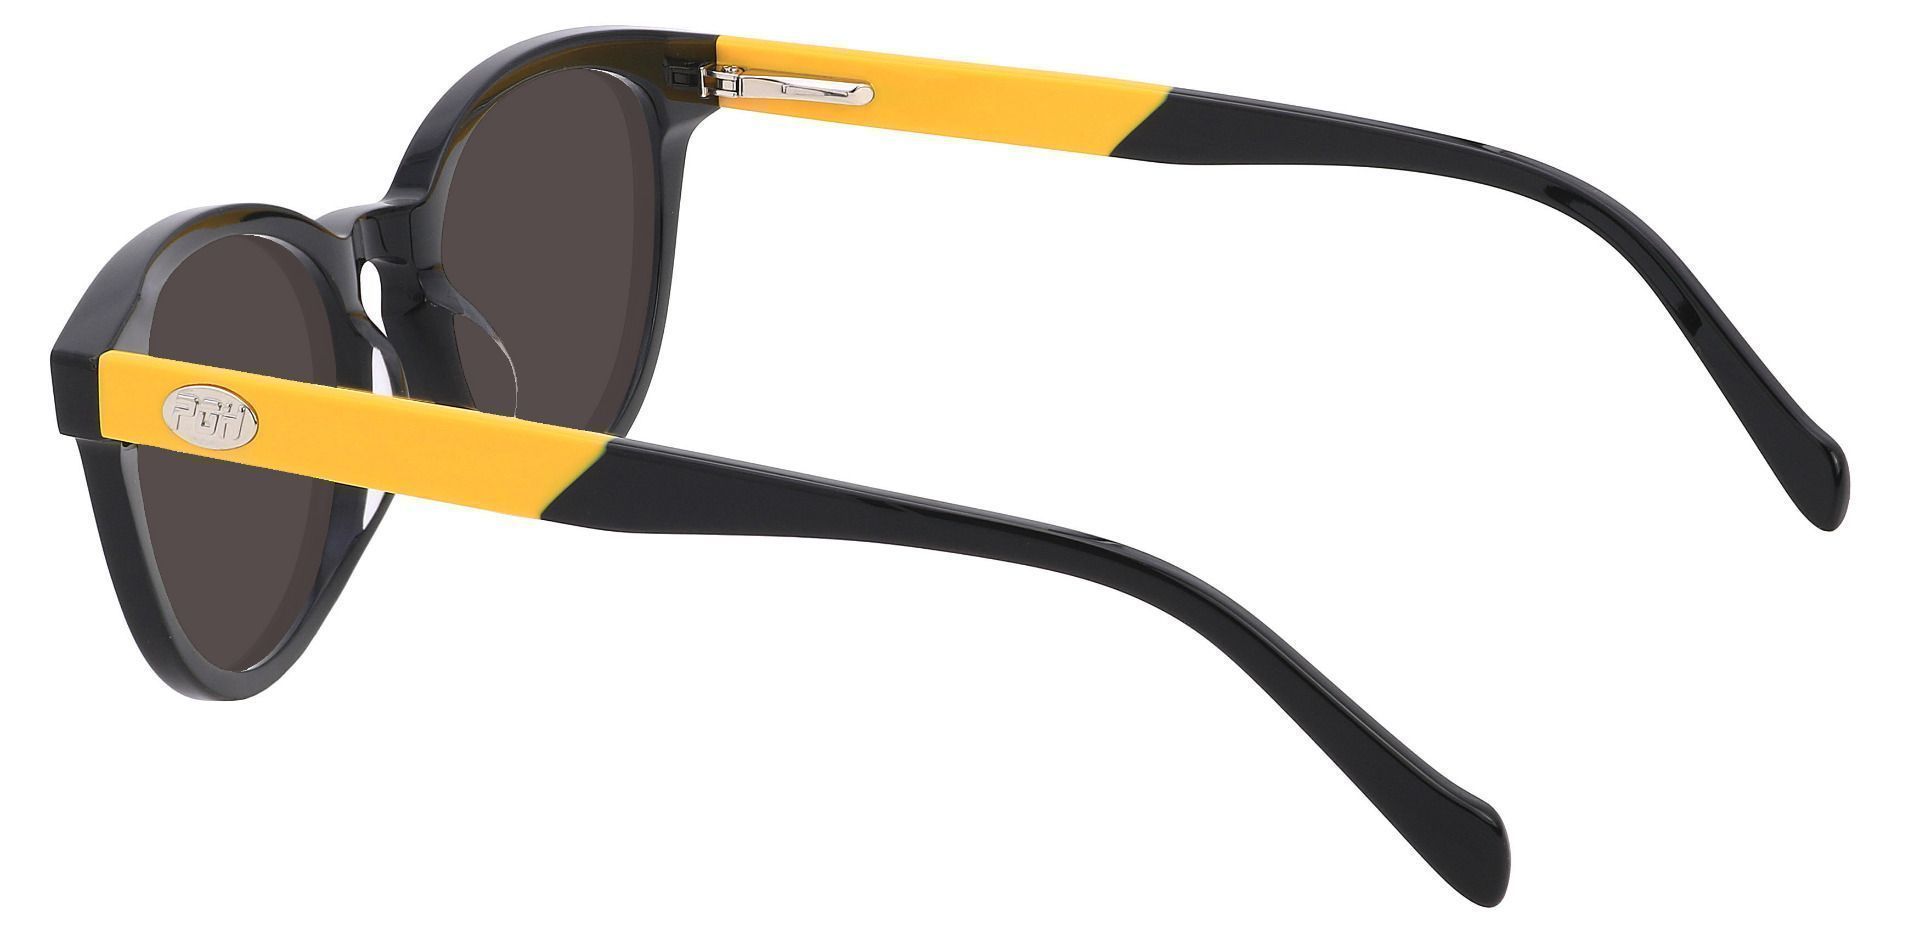 Forbes Oval Progressive Sunglasses - Black Frame With Gray Lenses